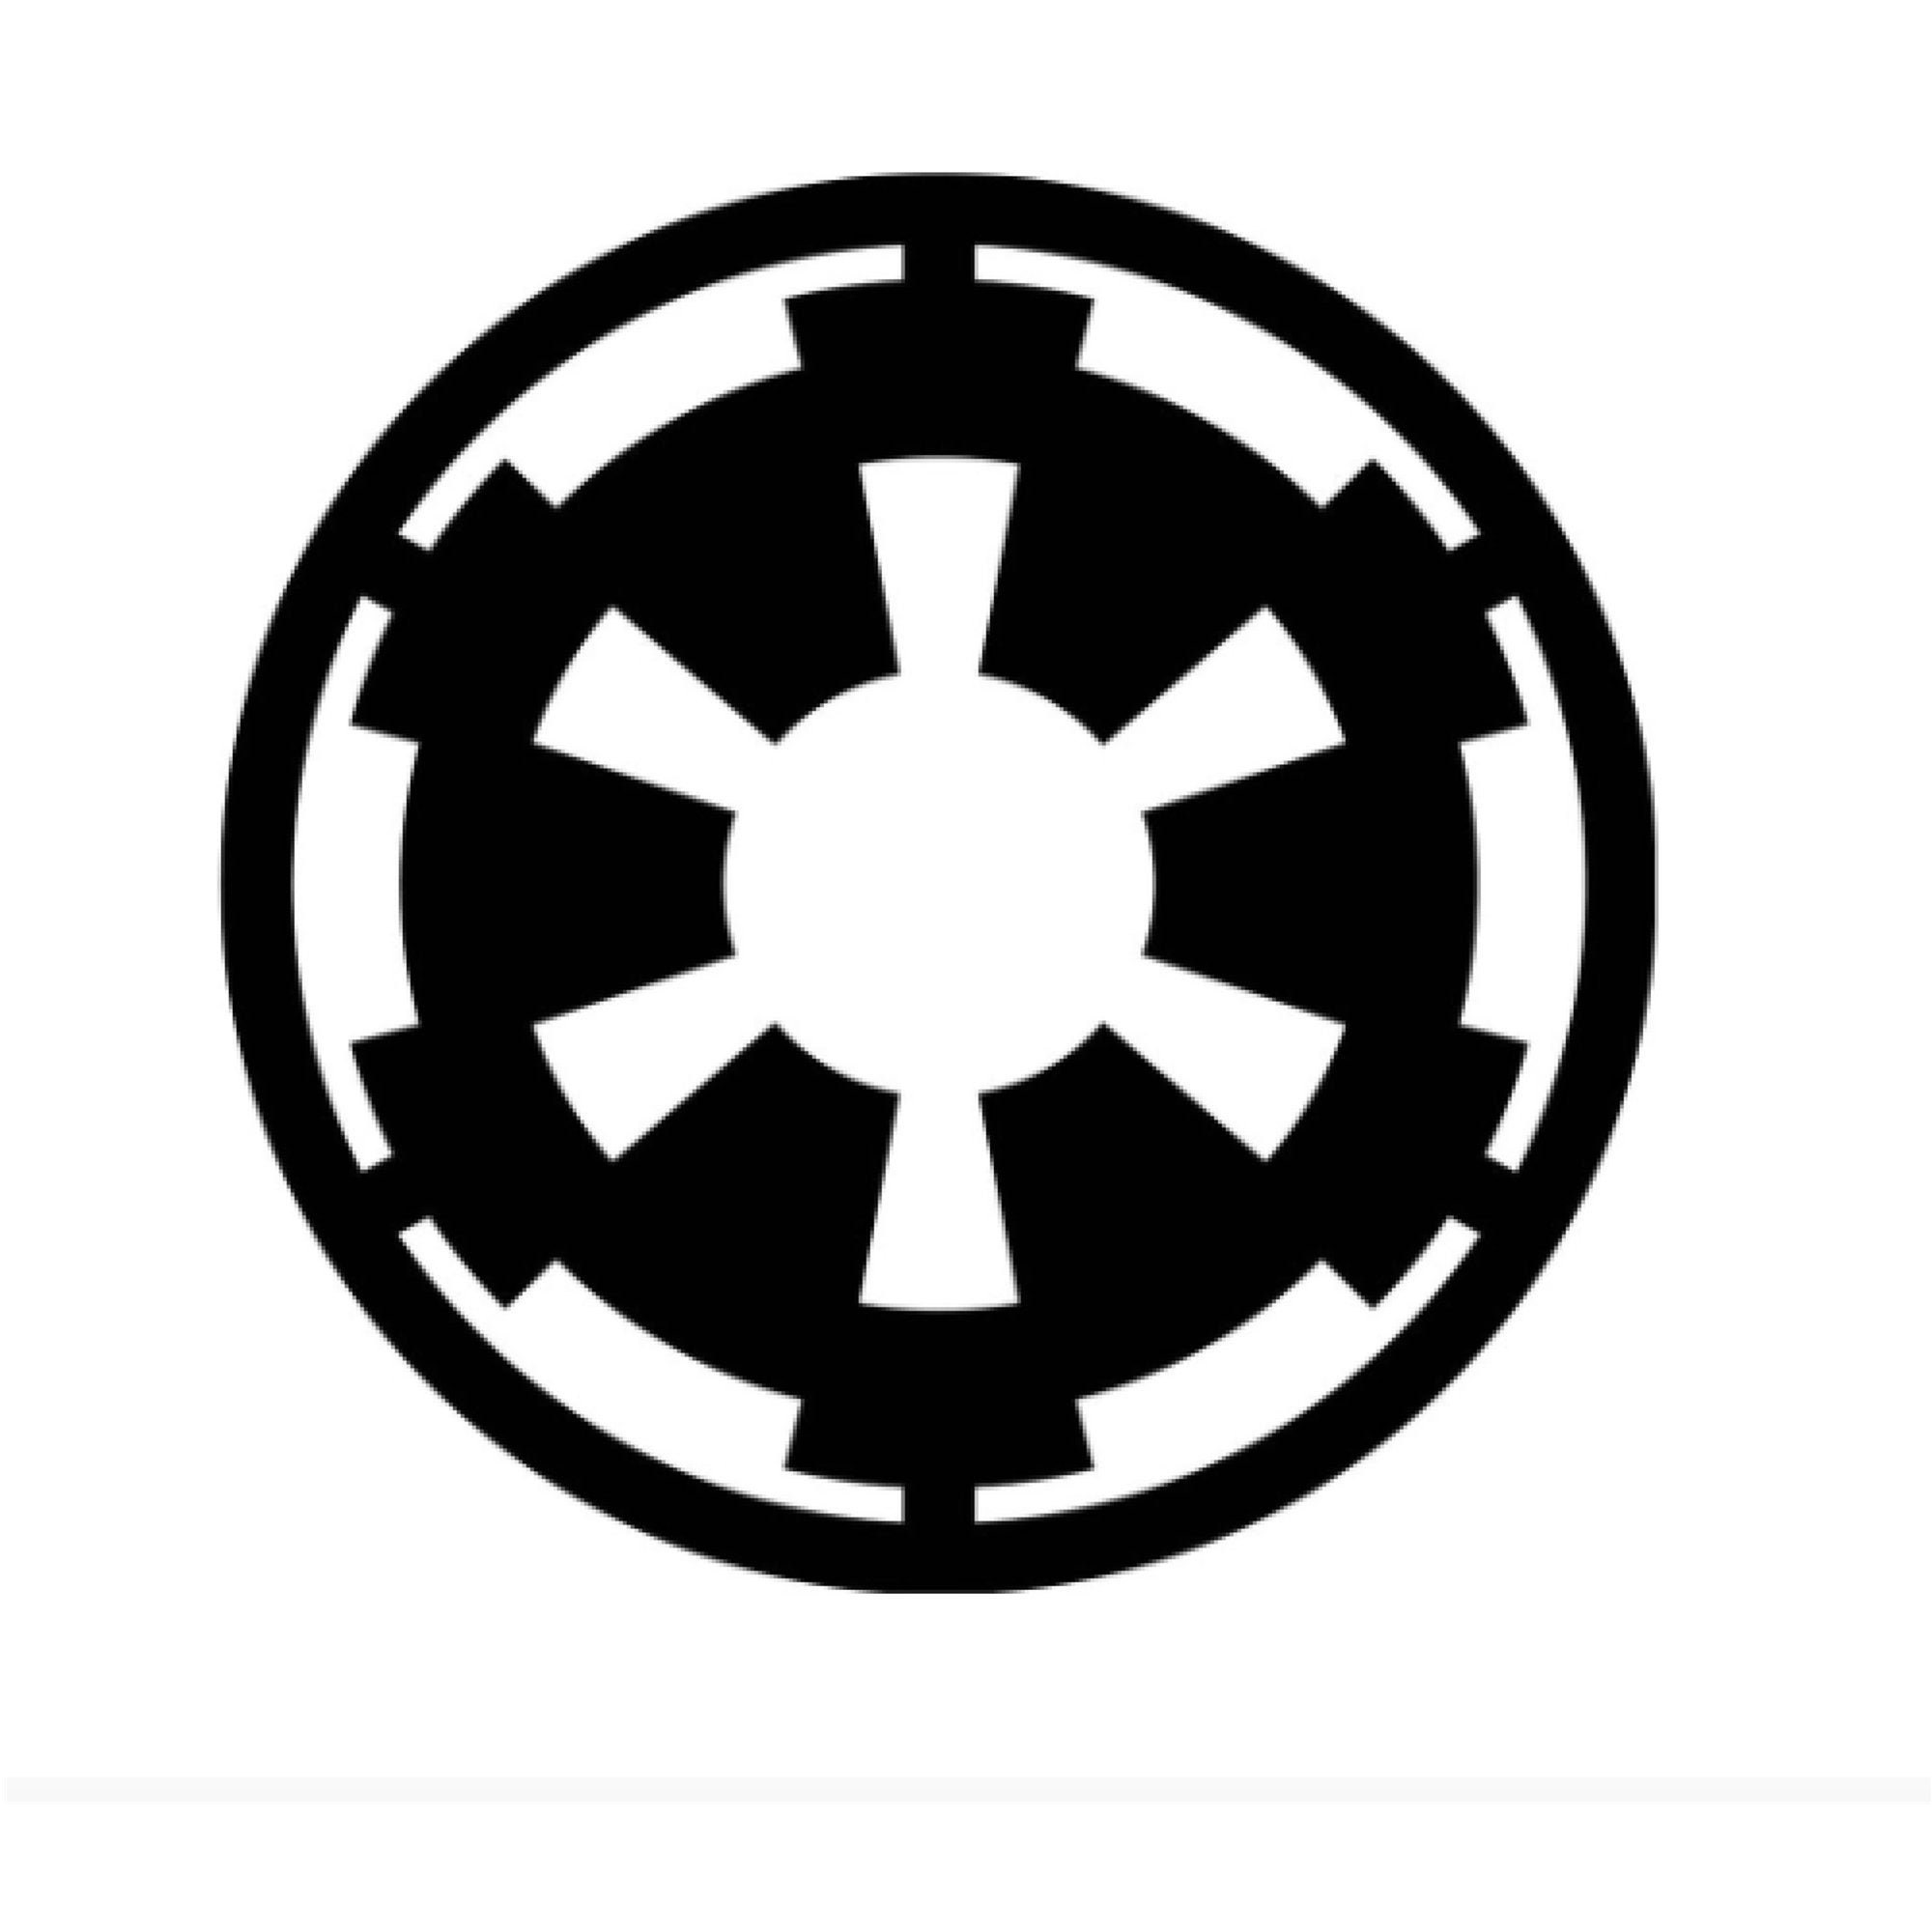 Star Wars Black Decal Galactic Empire Truck Window Sticker 